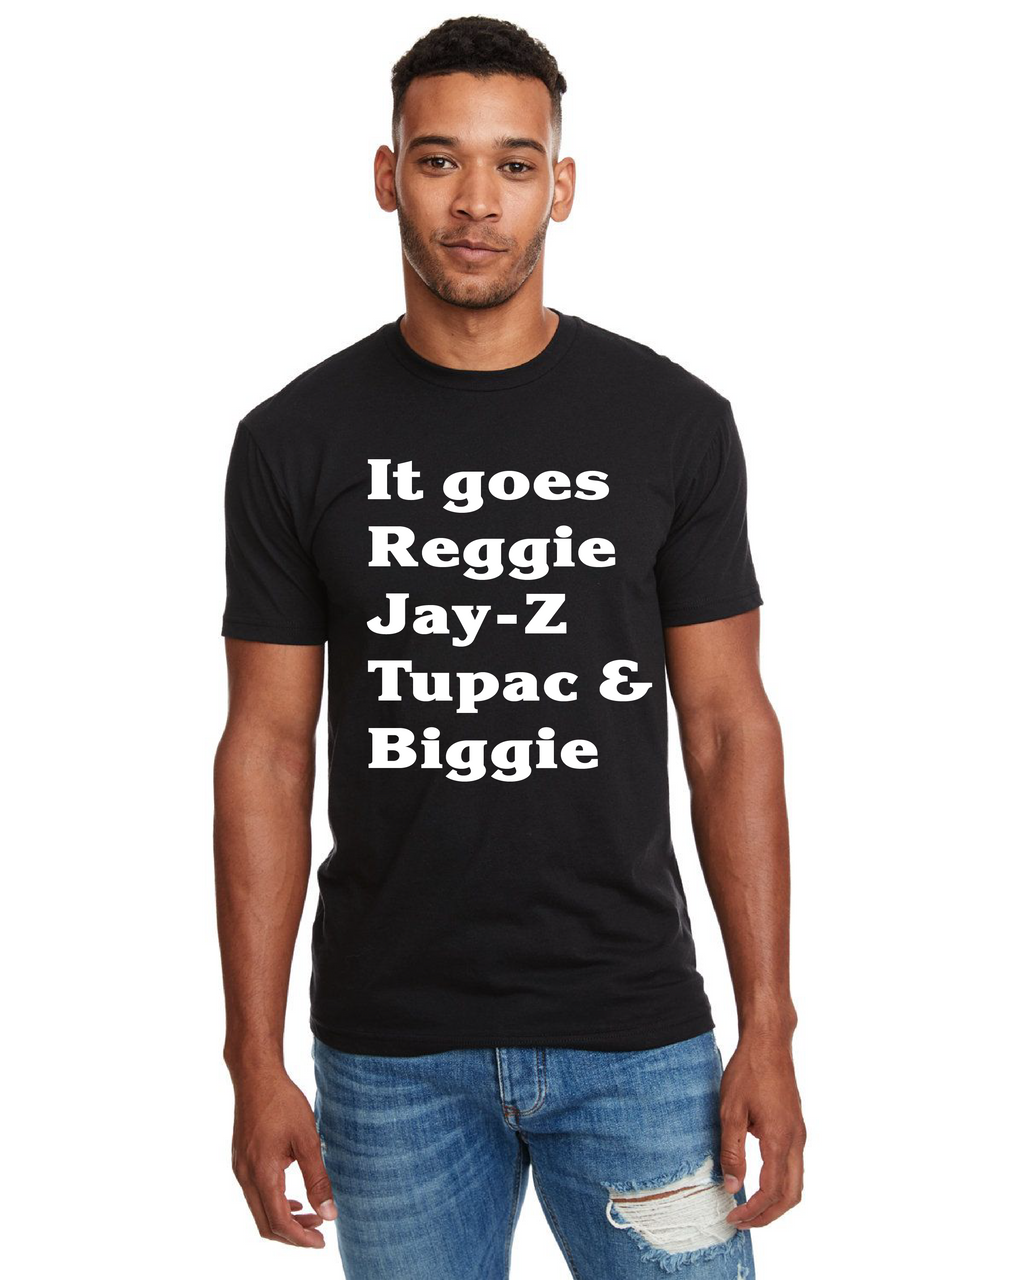 It goes Reggie Jay-Z Tupac & Biggie